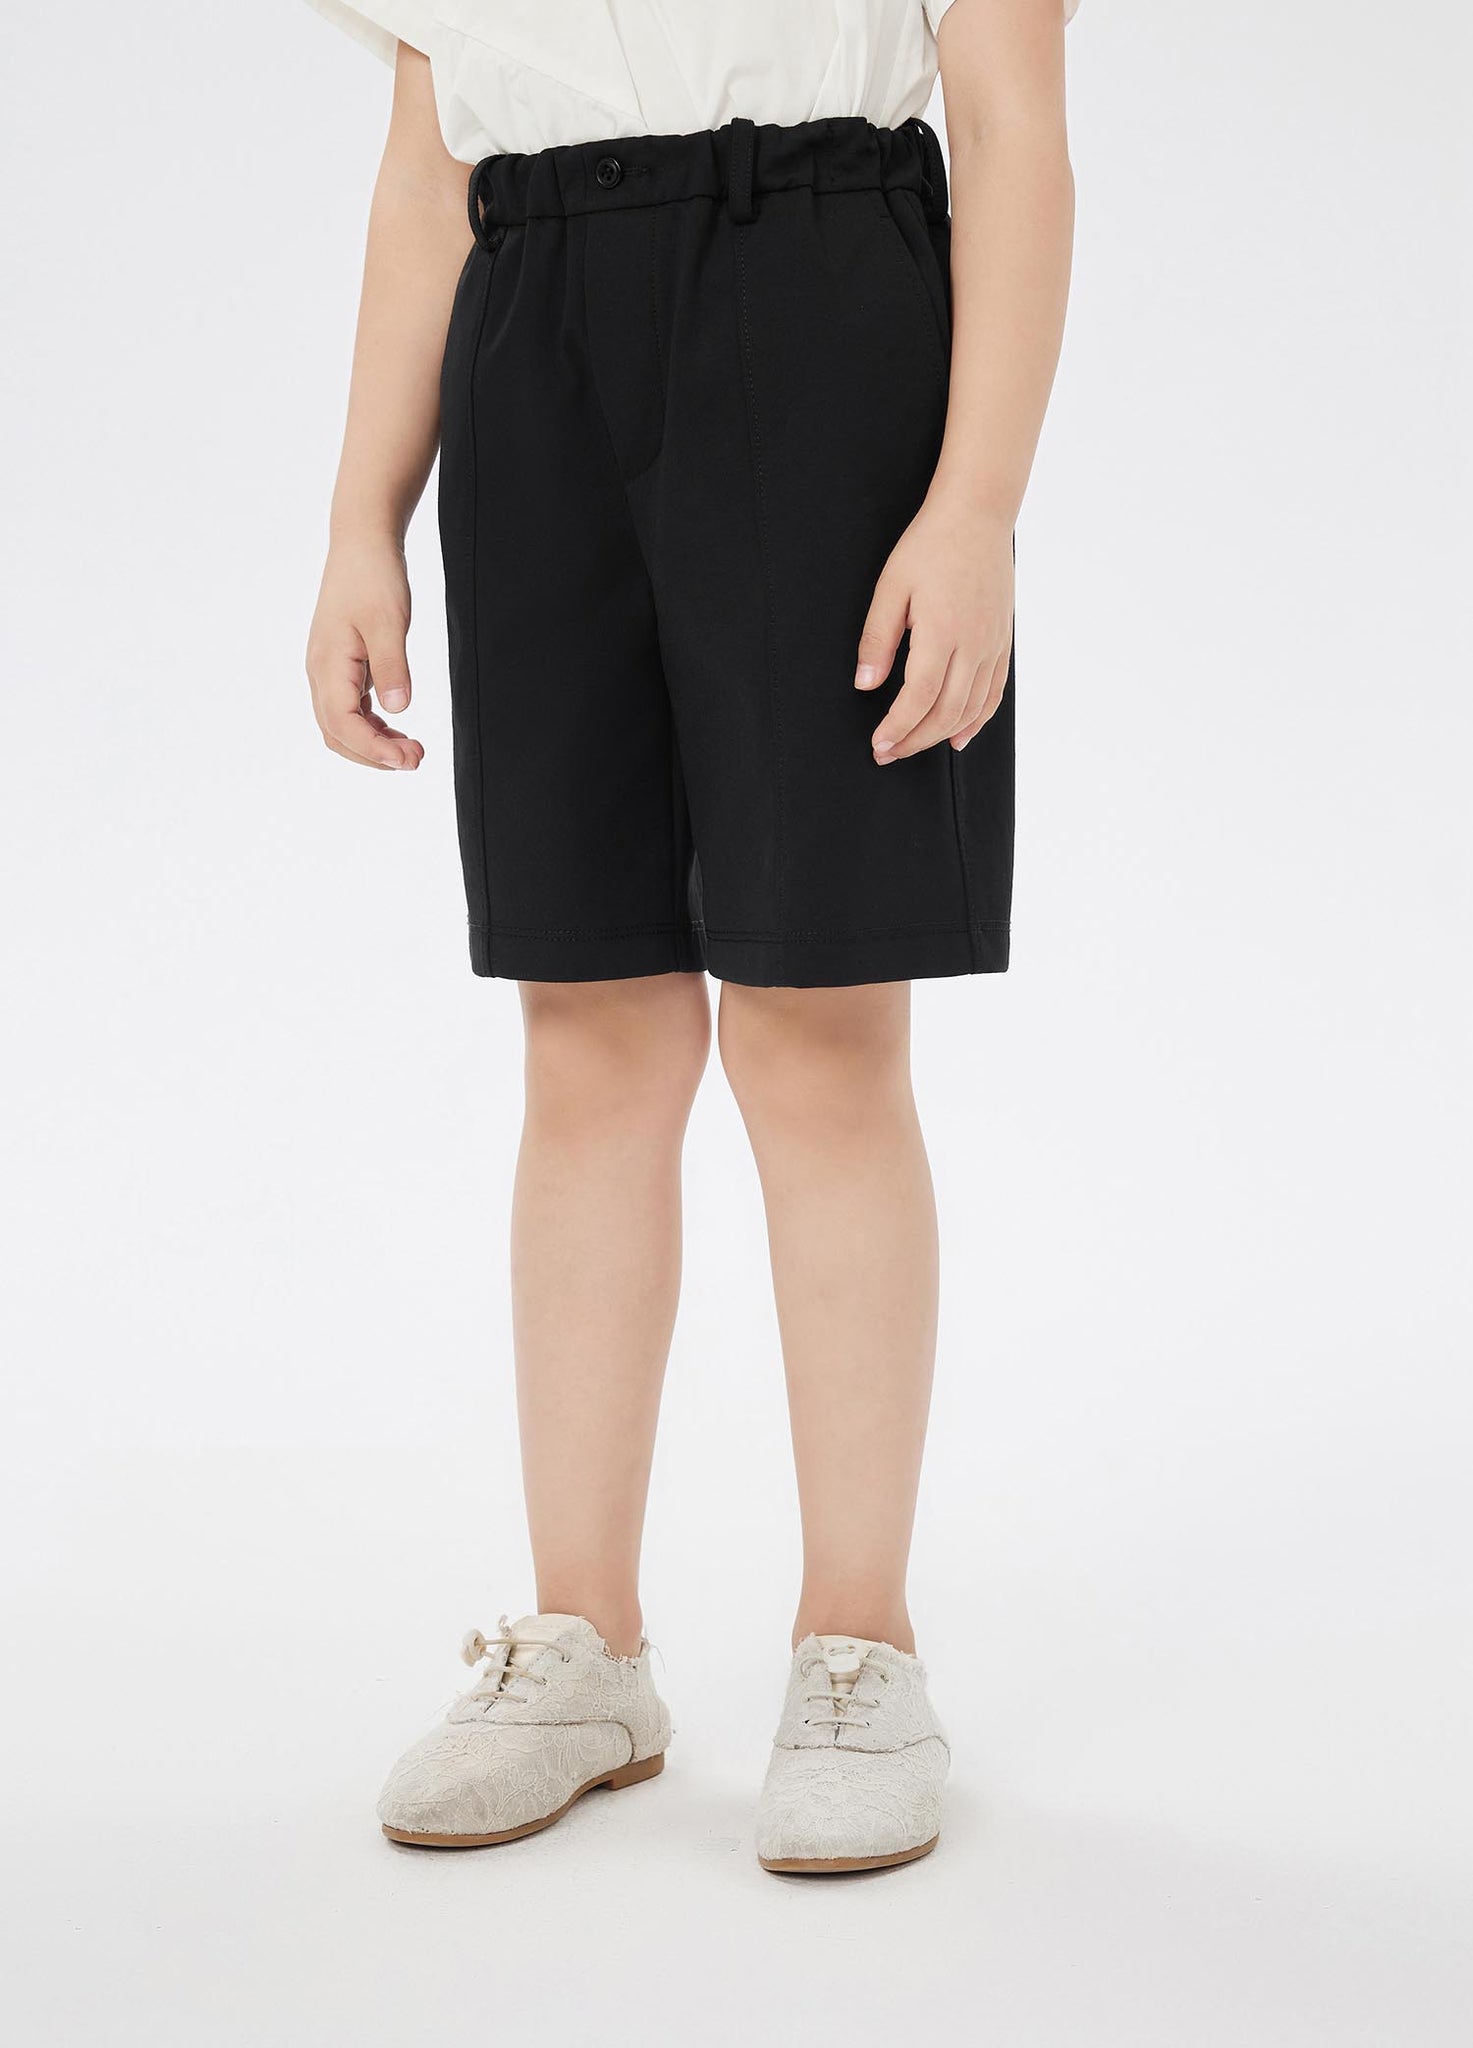 Shorts / jnby by JNBY Black Mid-Length Shorts